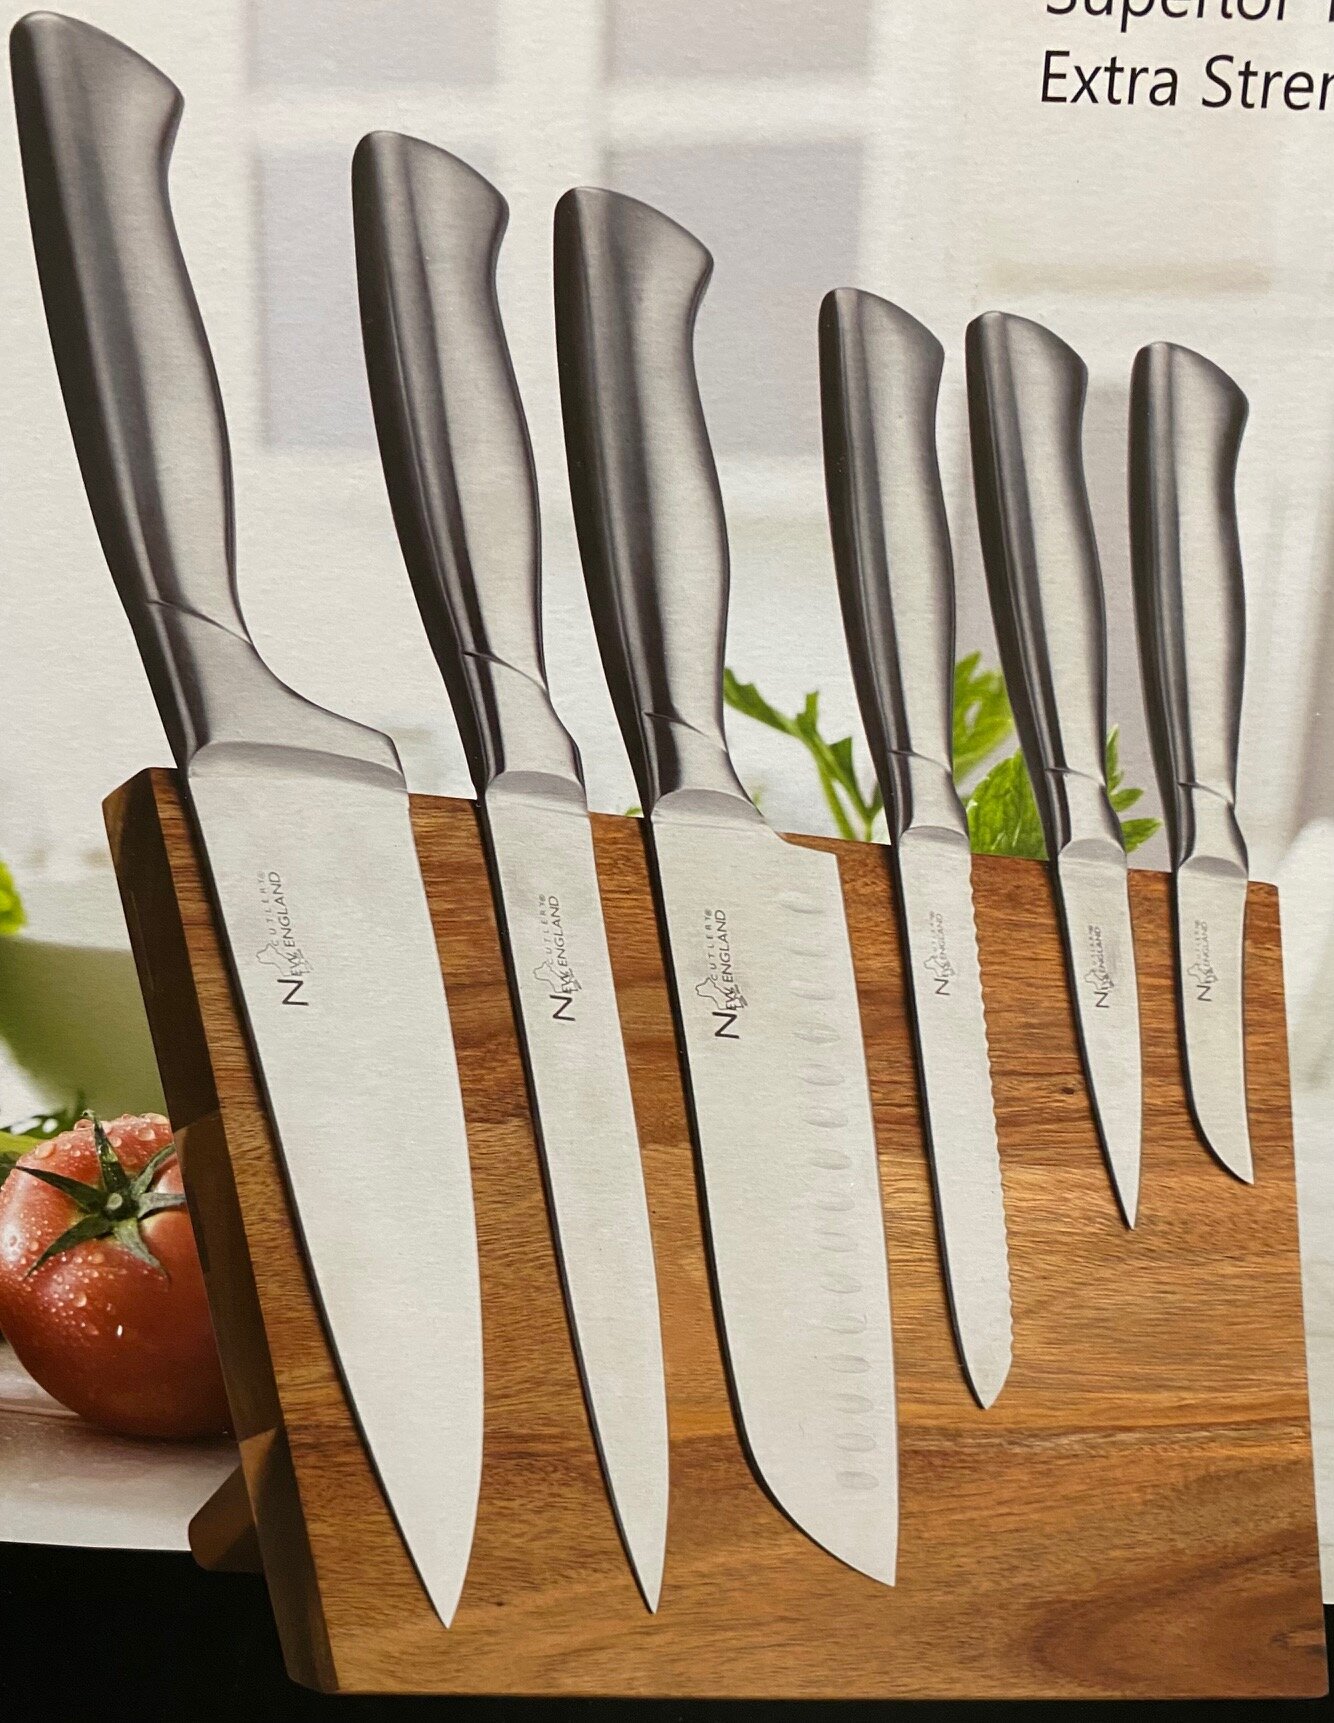 6 Piece Cutlery Knife Set